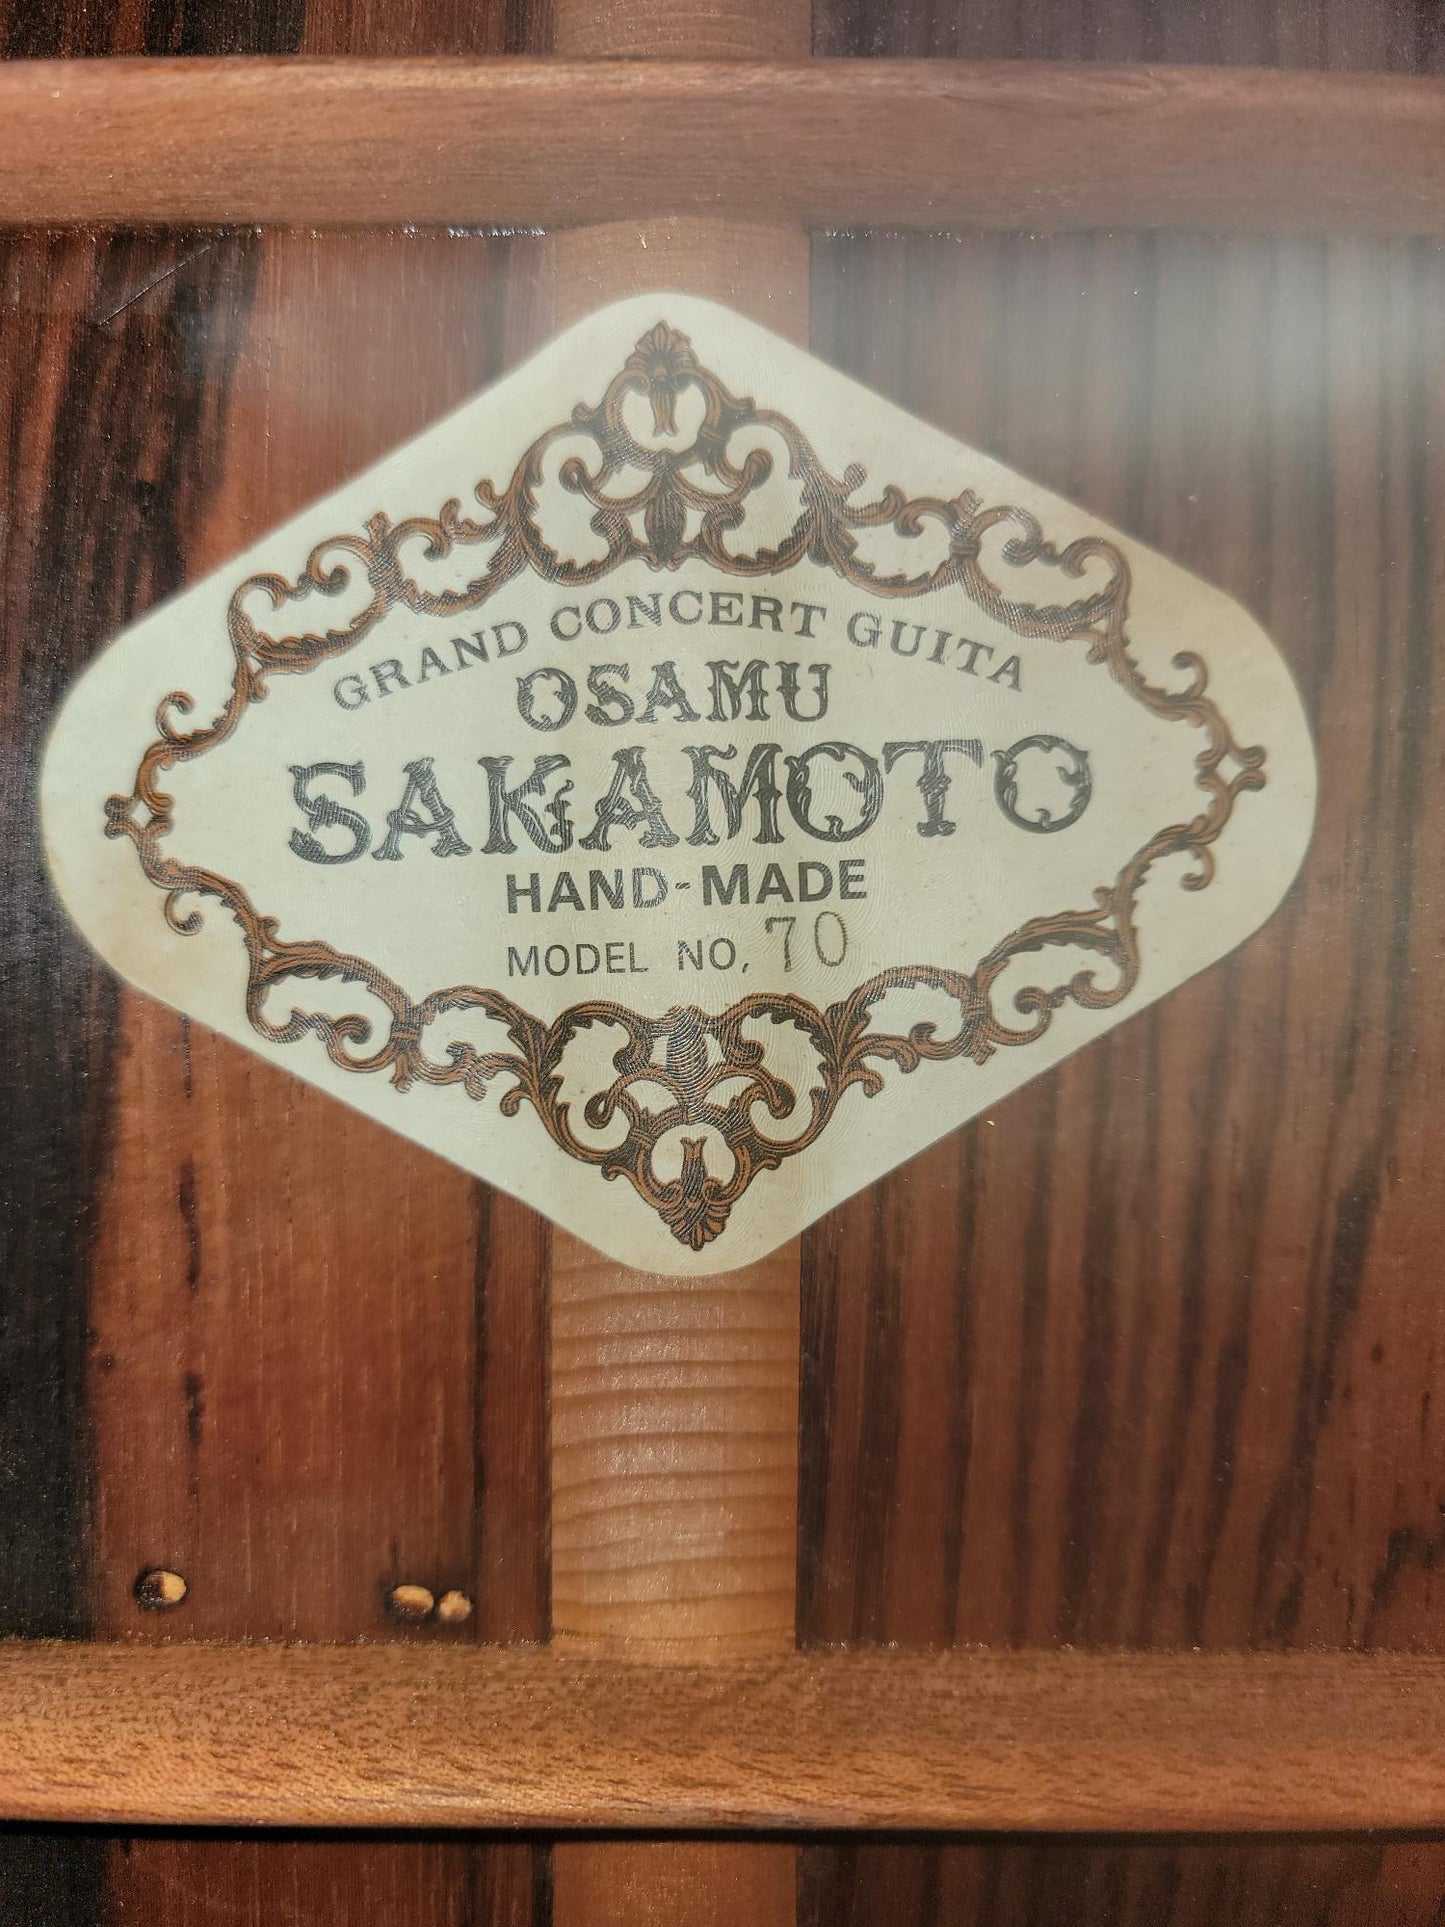 Osamu Sakamoto Grand Concert Guitar Model 70